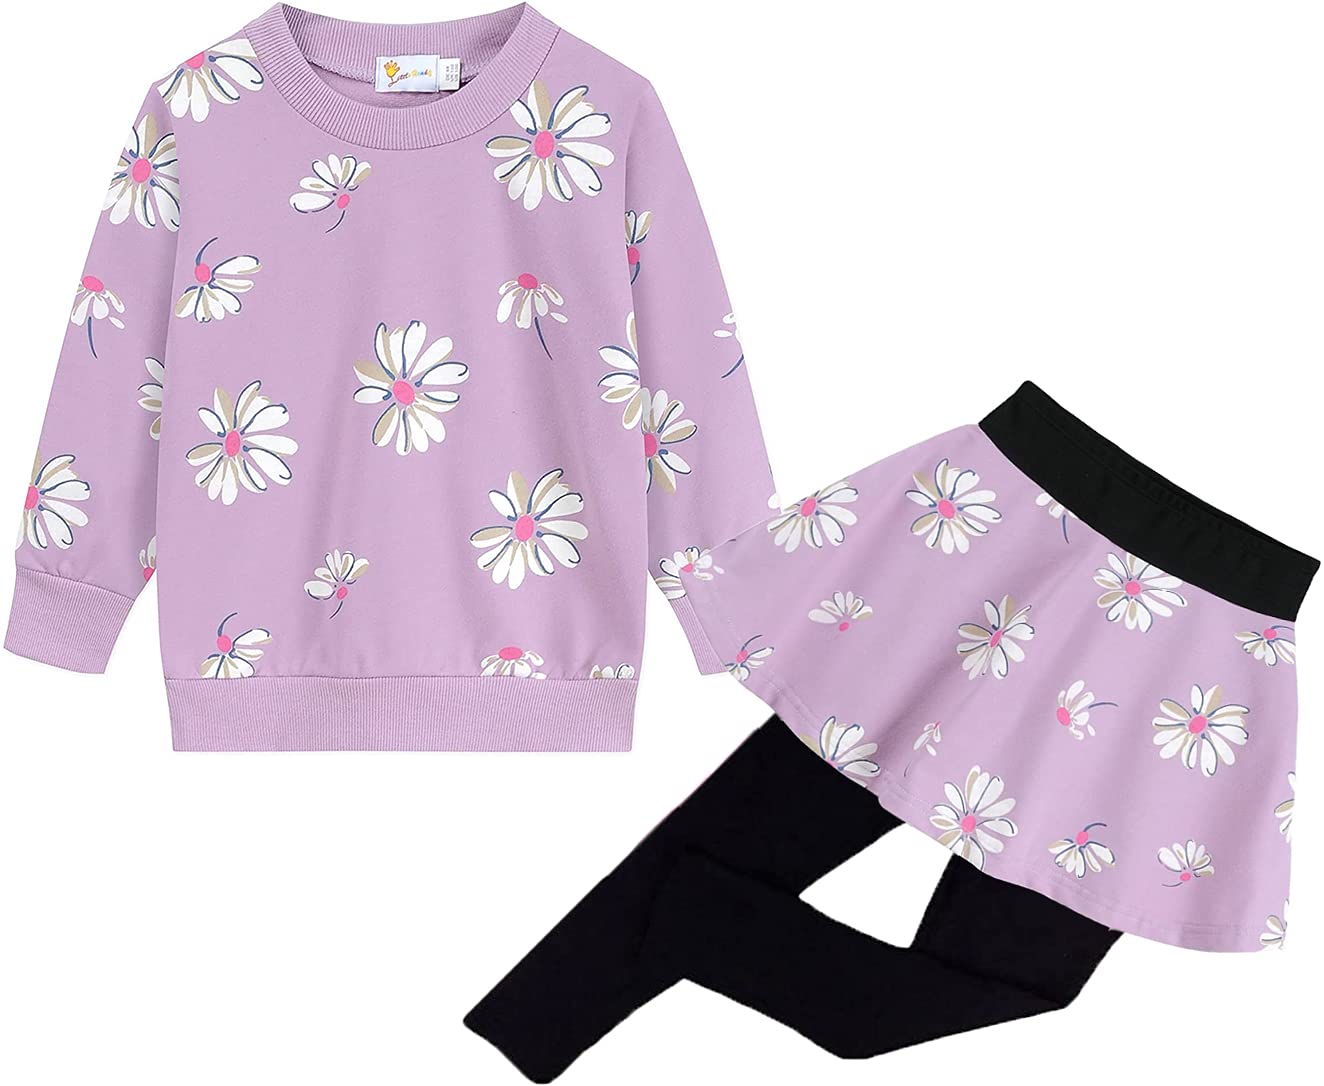 Little Girls Clothing Set Floral Print Outfit Long Sleeve Heart Print  Sweatshirt Tops and Leggings Skirt